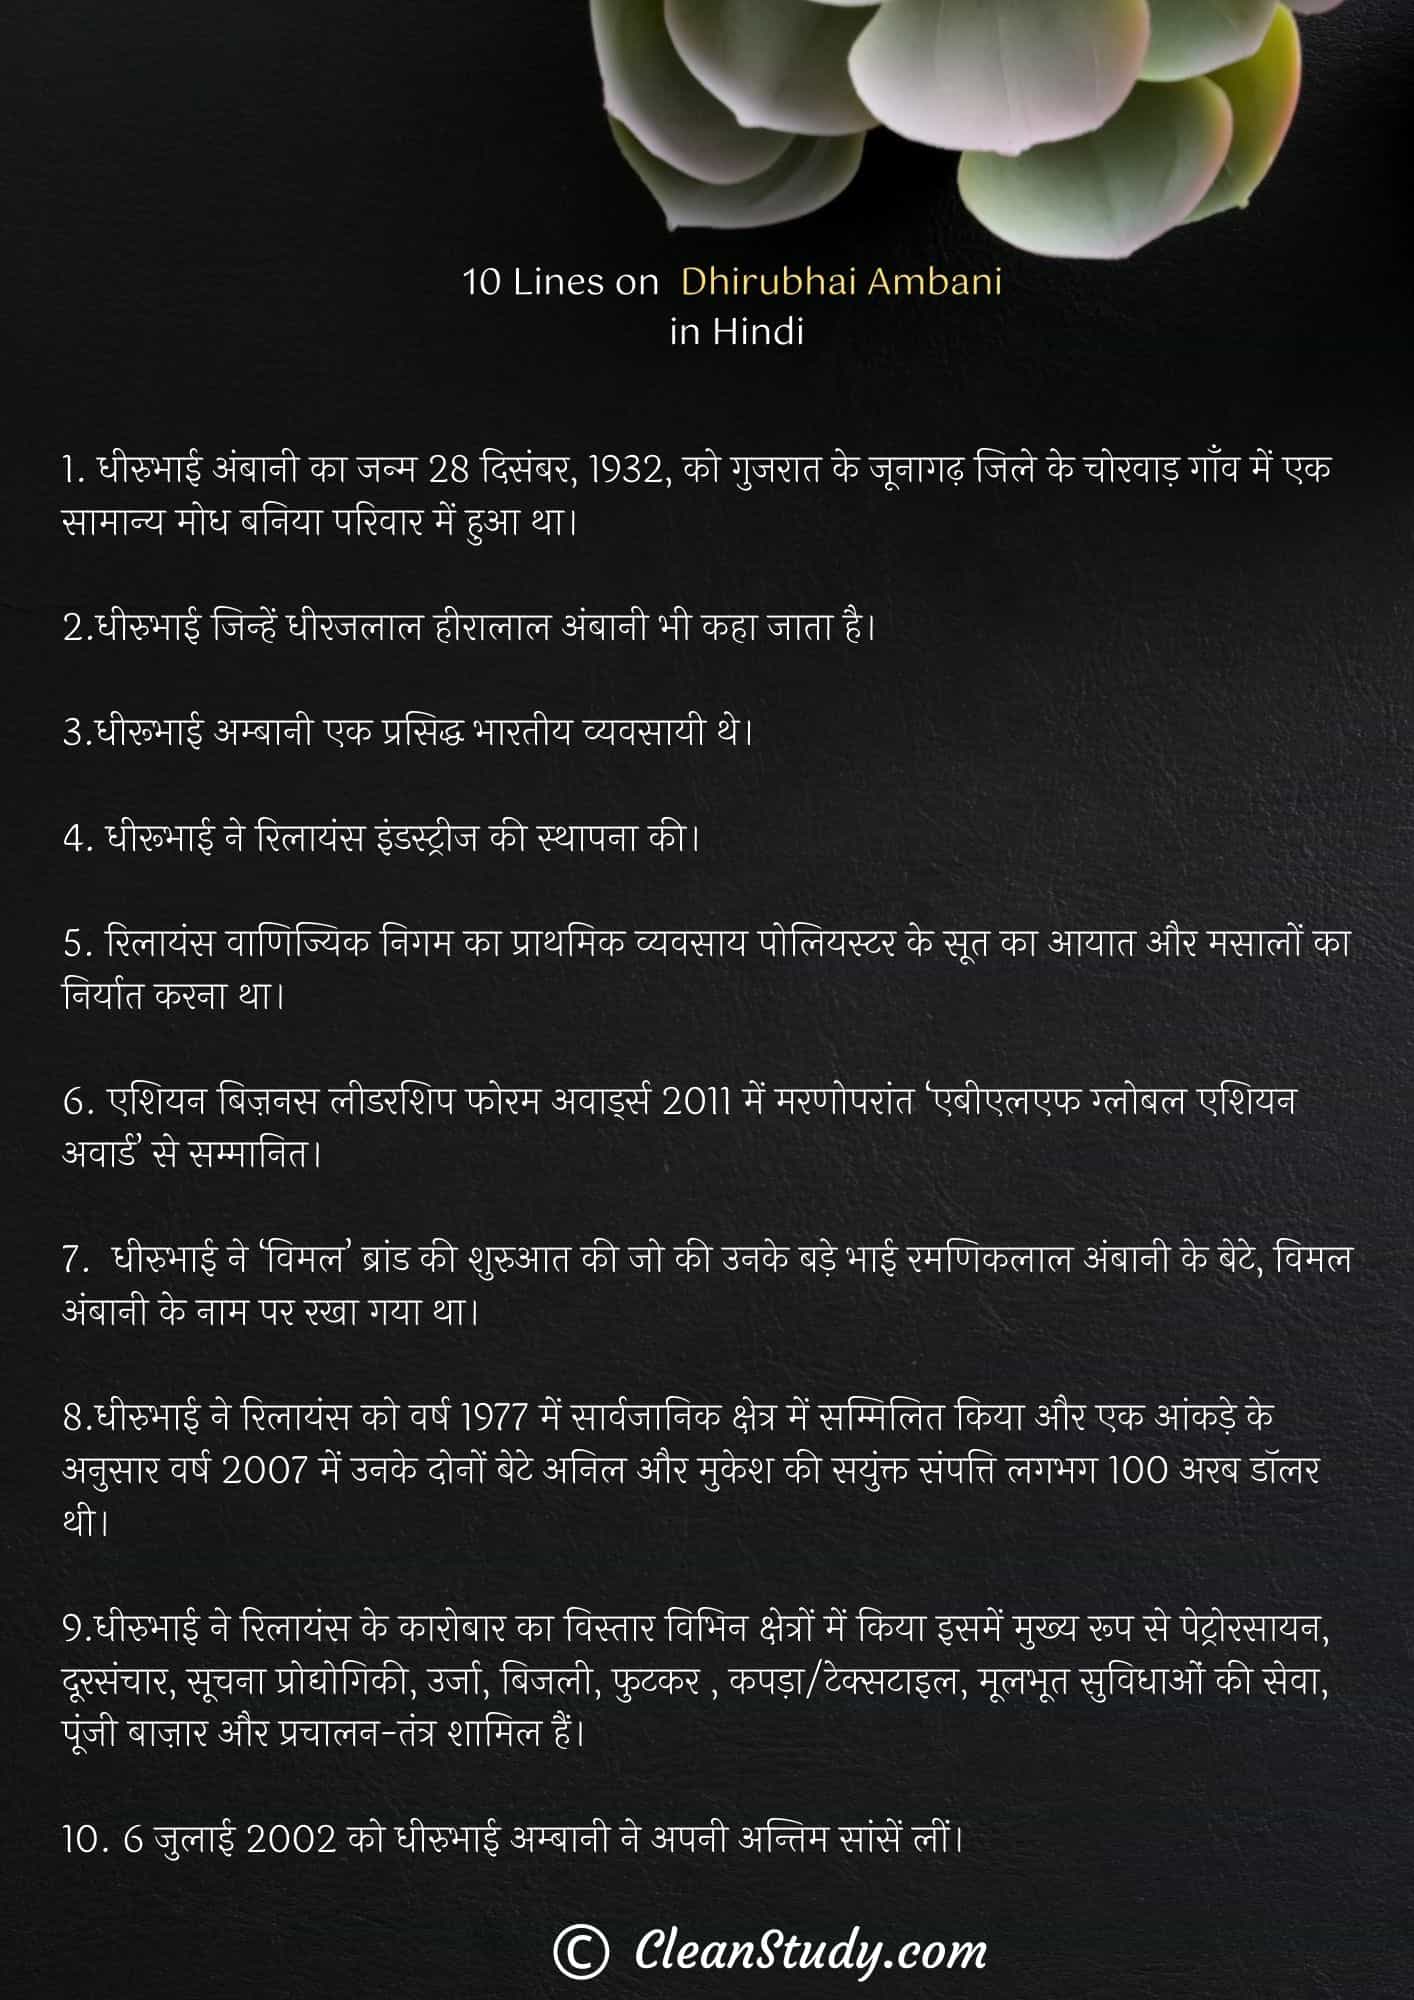 10 Lines on Dhirubhai Ambani in Hindi